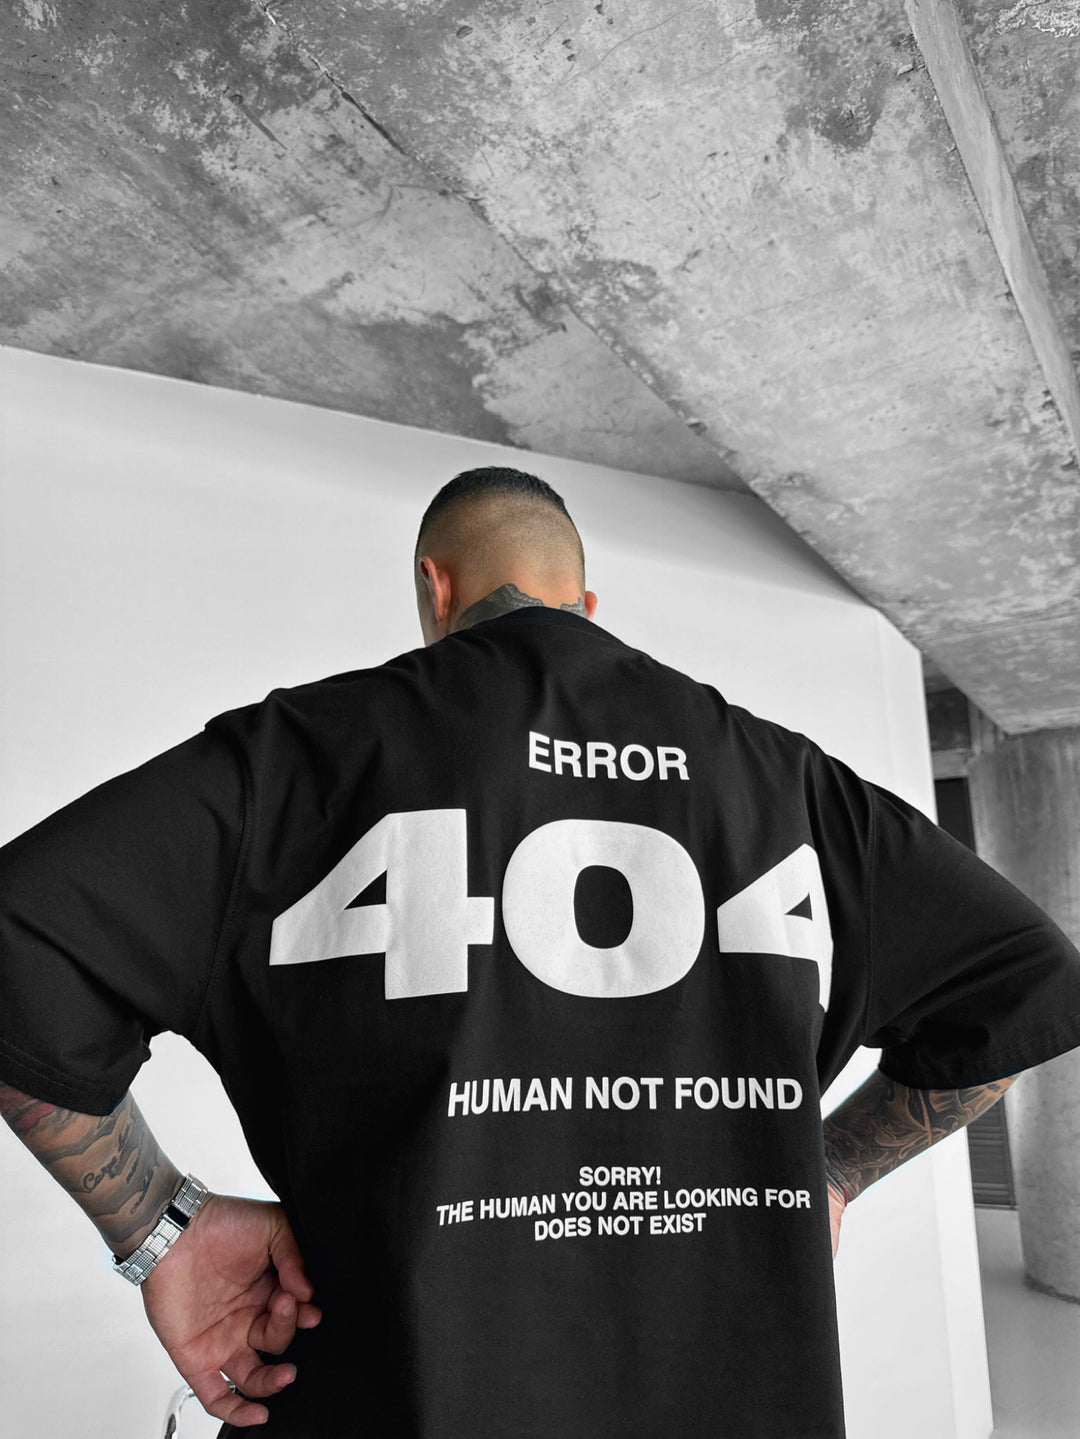 Oversize 404 T-shirt - Black